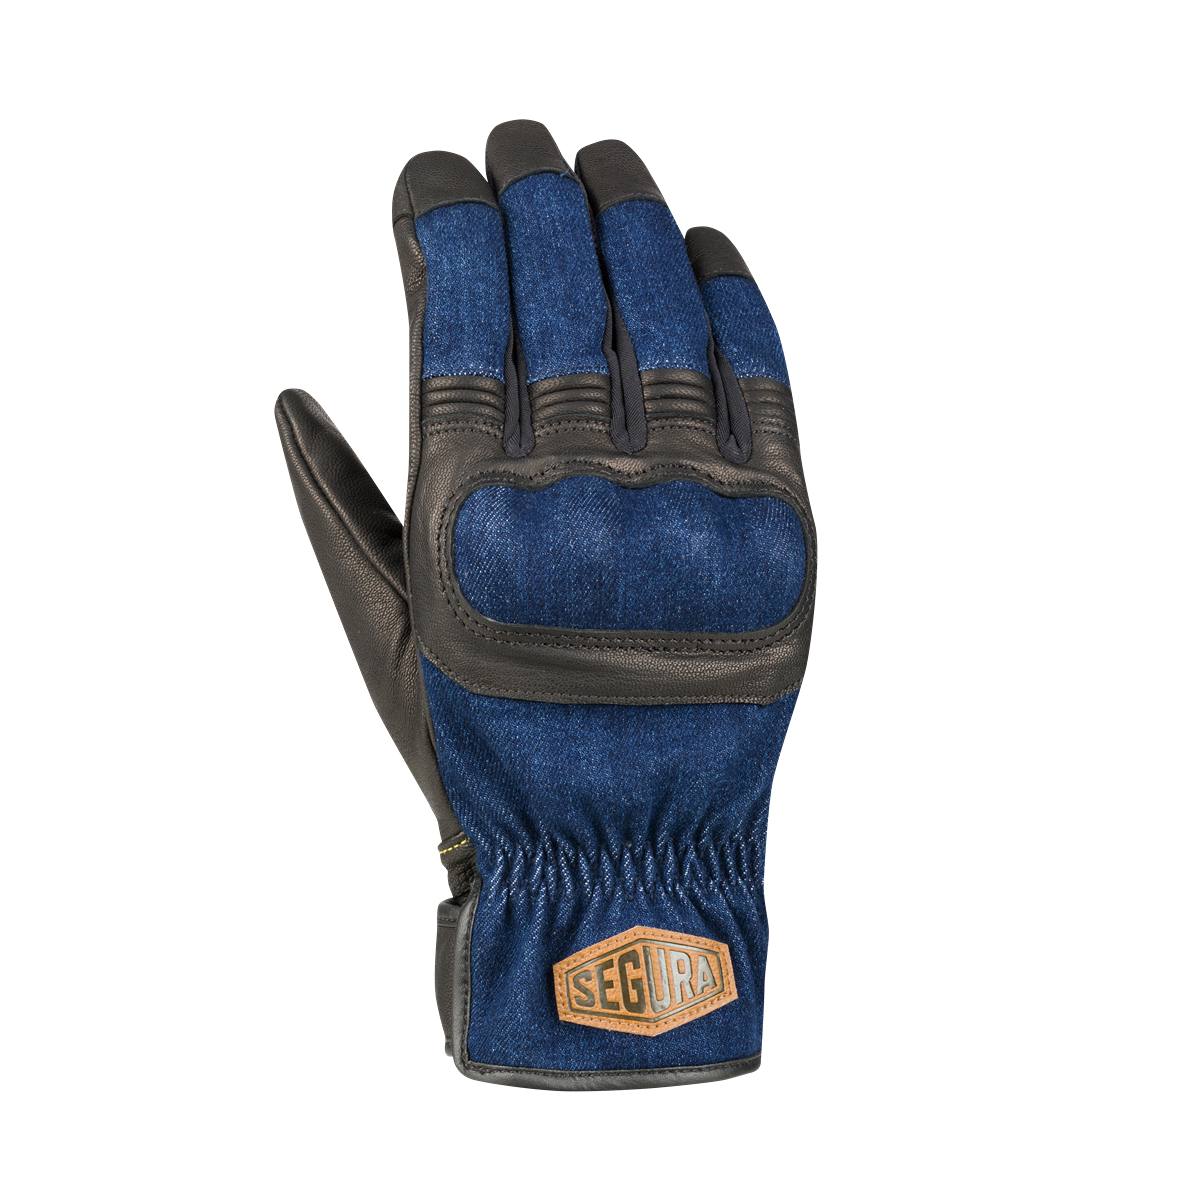 Image of Segura Hunky Gloves Black Blue Size T12 ID 3660815190524